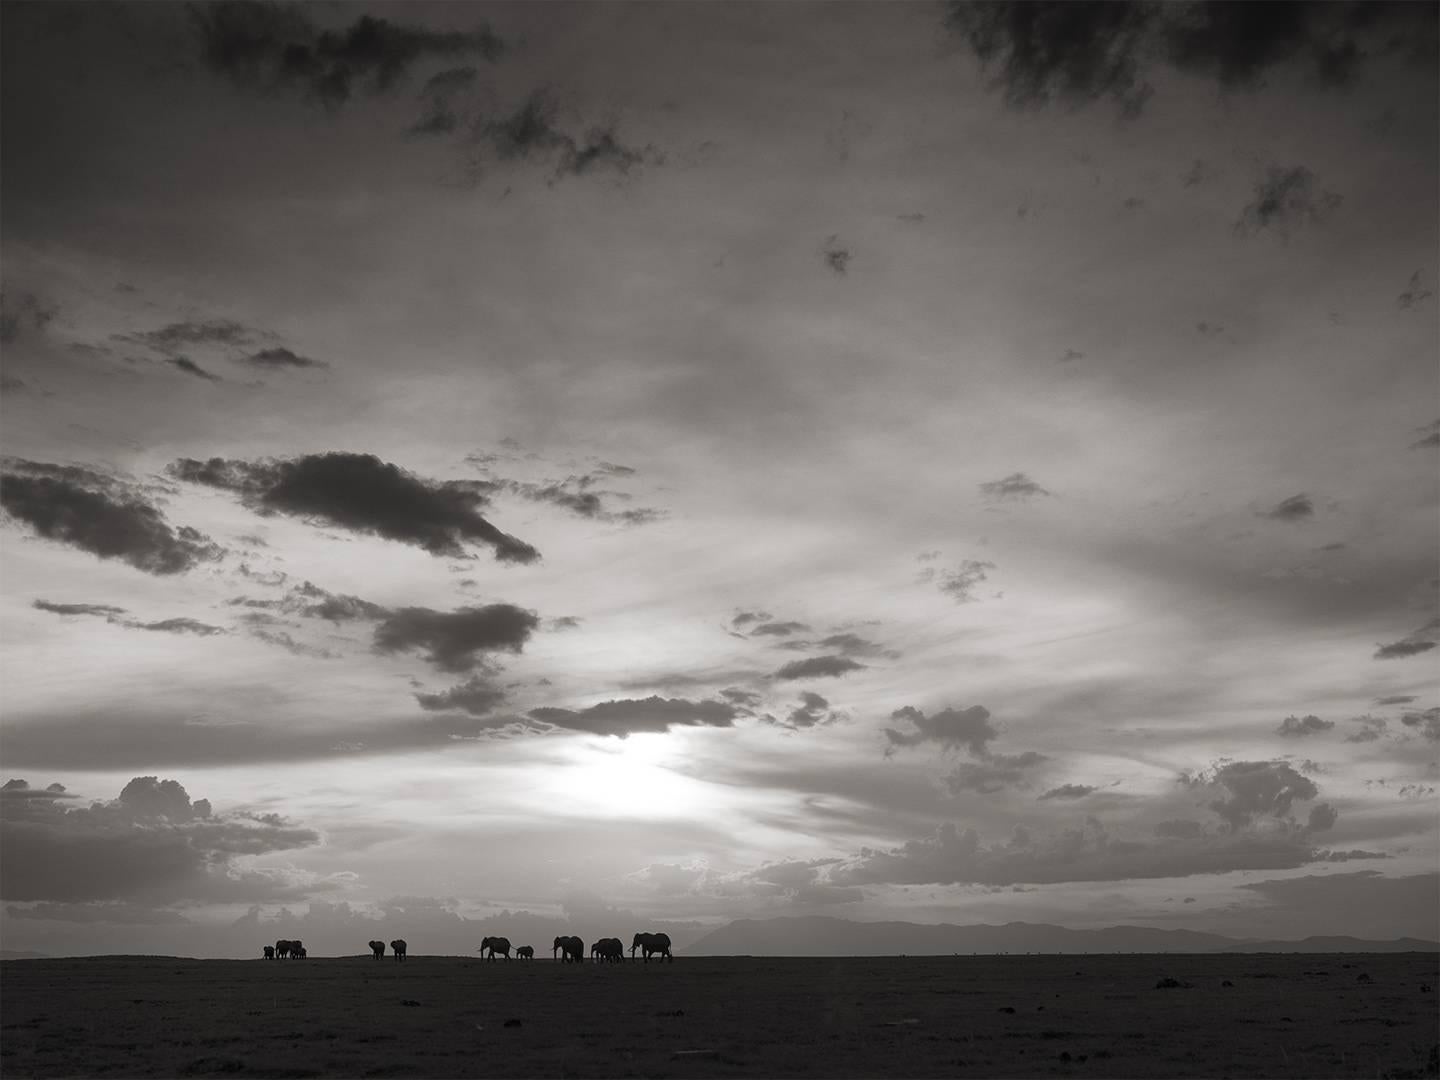 Joachim Schmeisser Black and White Photograph - Elephants in the sunset, Kenya